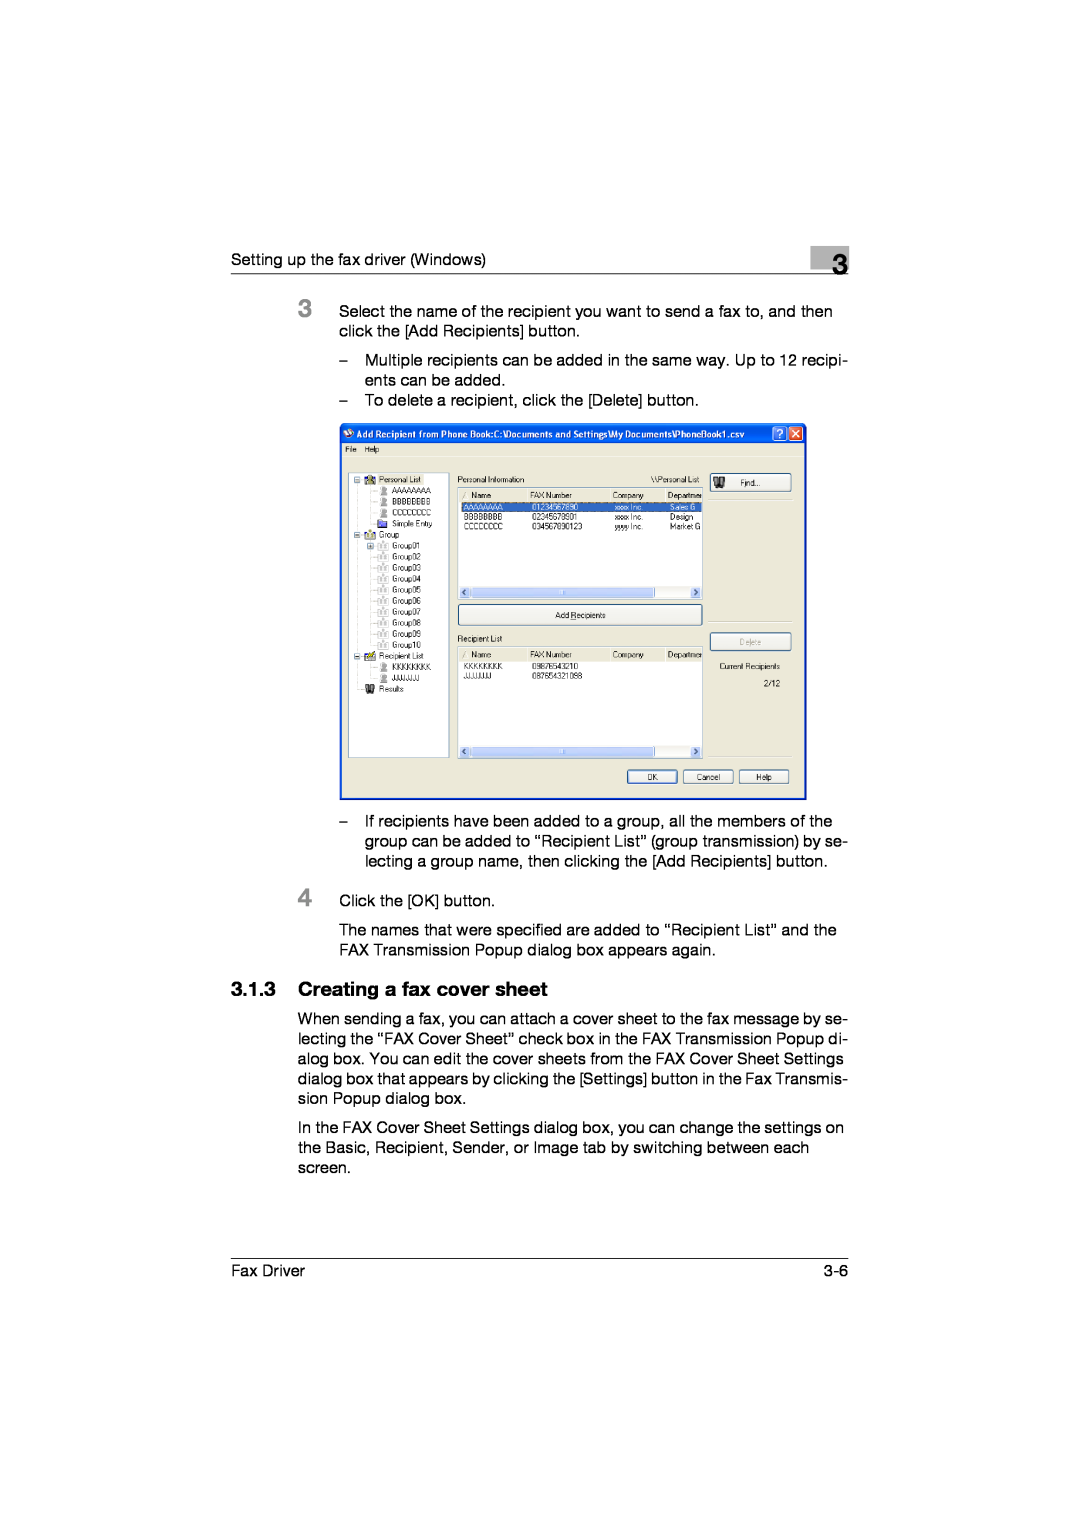 Konica Minolta 362, 282, 222 manual 3.1.3Creating a fax cover sheet 